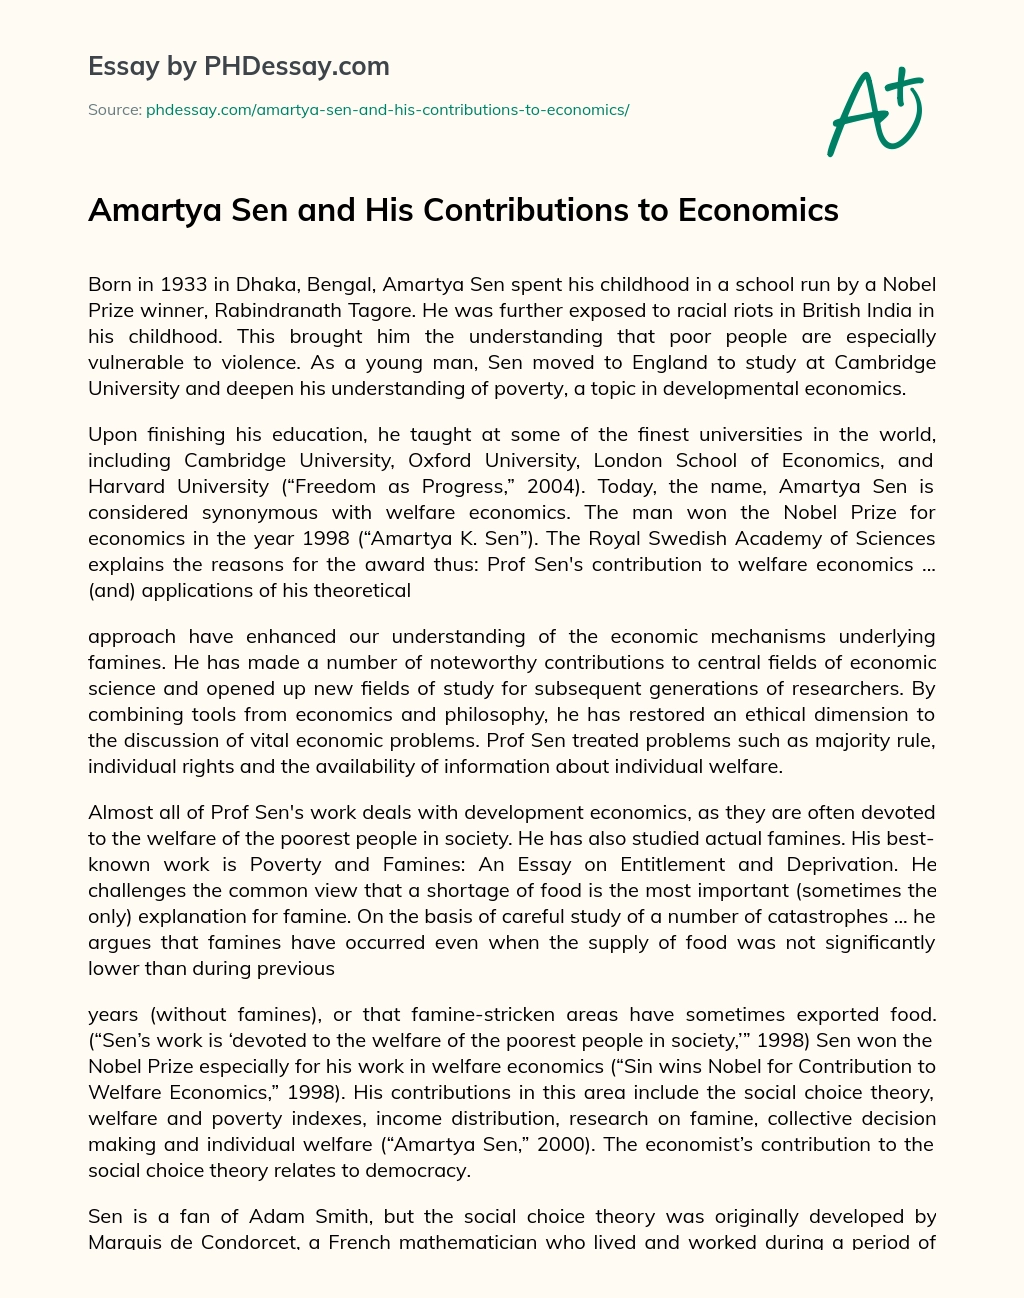 Amartya Sen and His Contributions to Economics essay